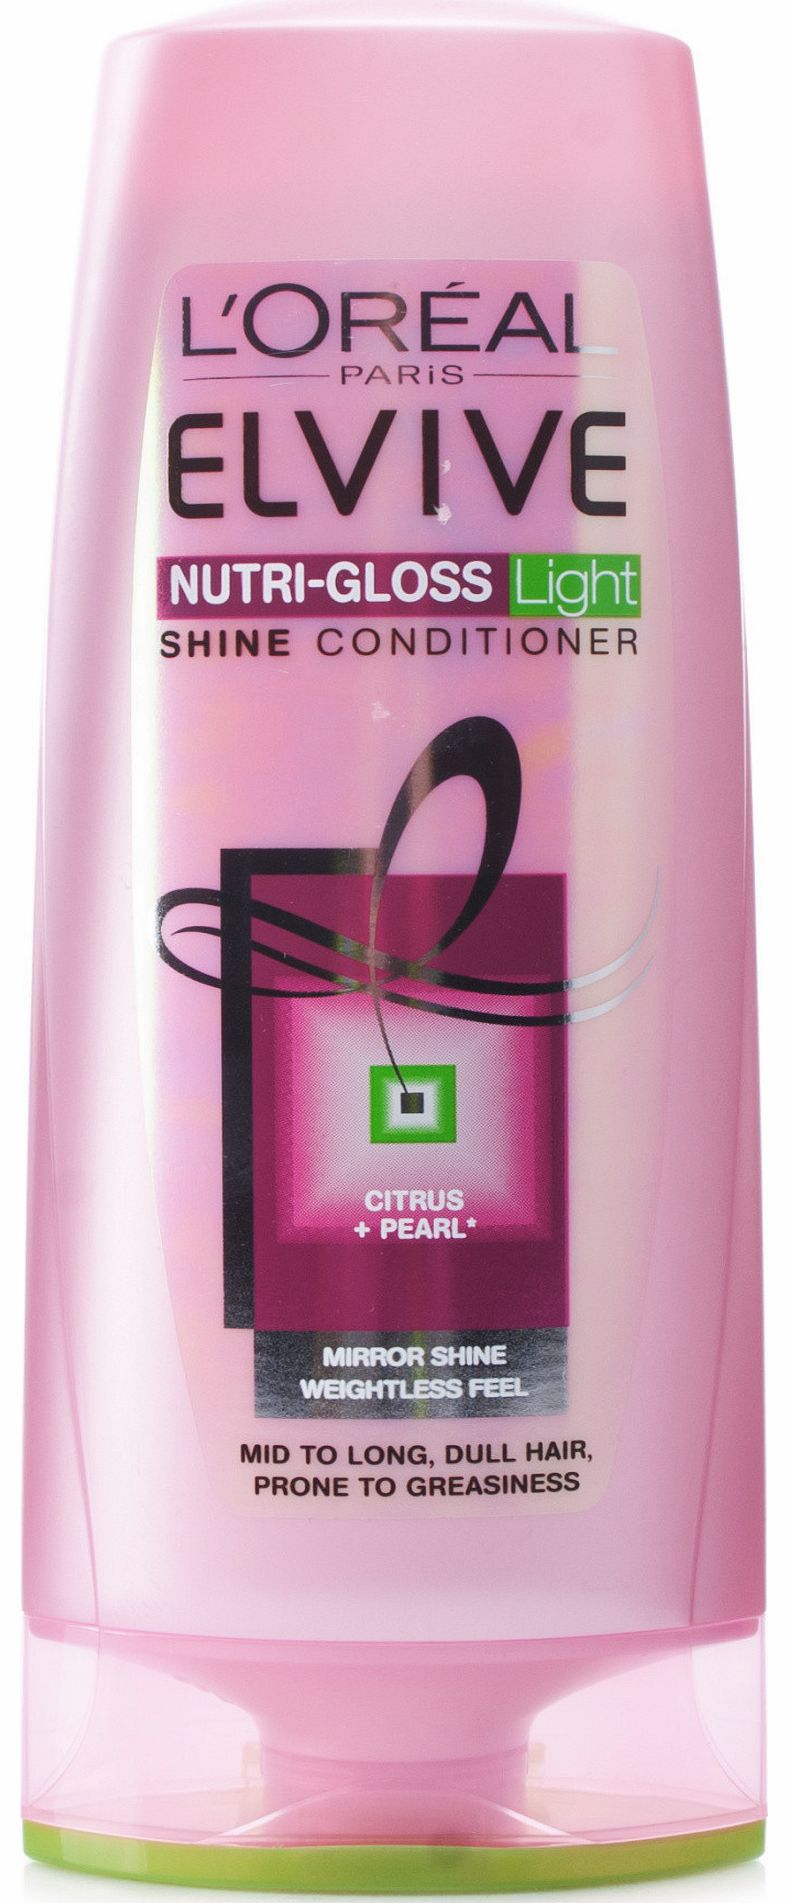 L'Oreal Elvive Nutri-Gloss Light Conditioner